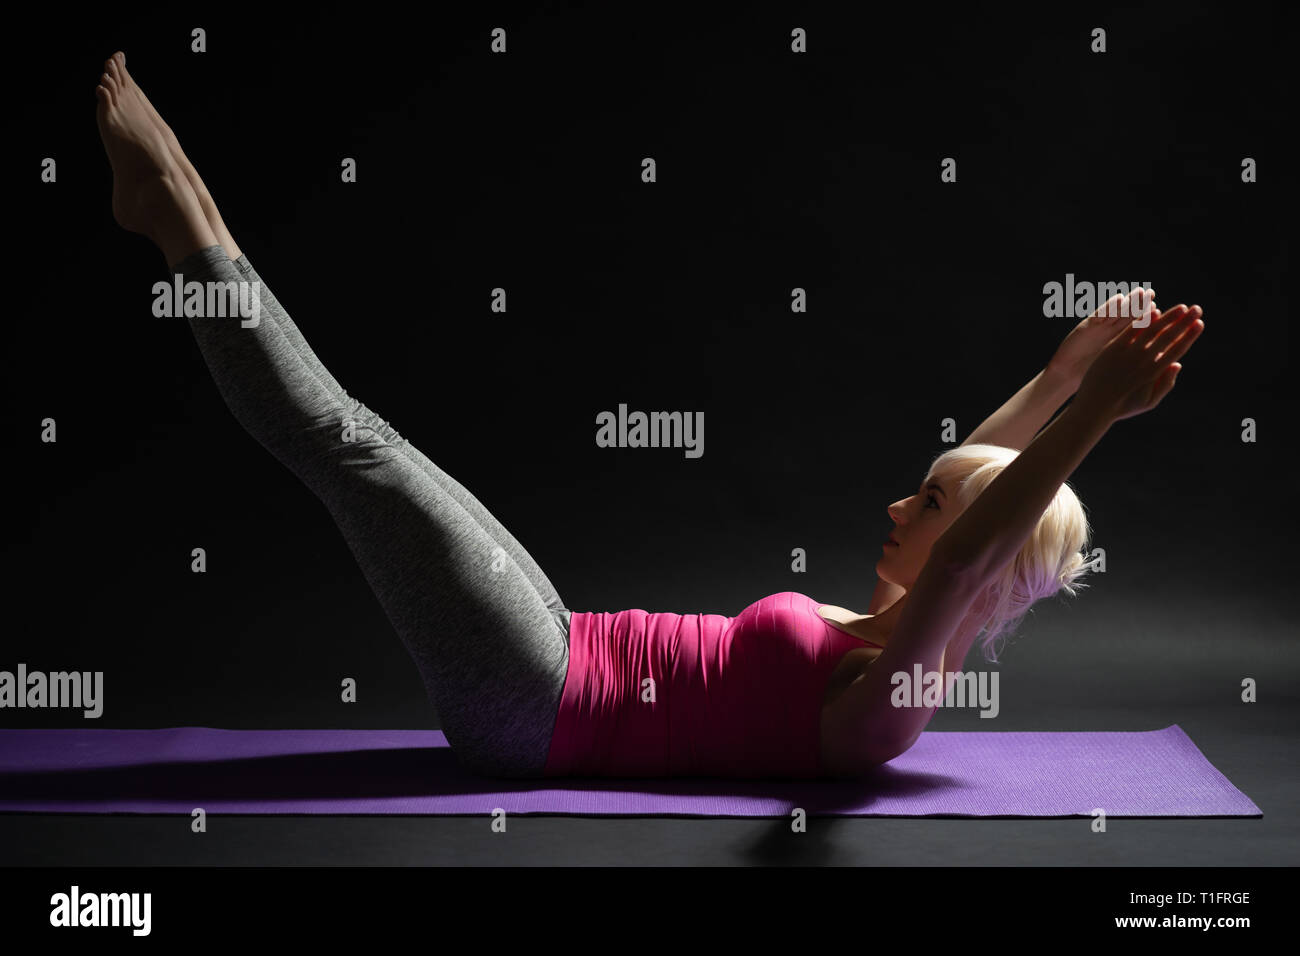 https://c8.alamy.com/comp/T1FRGE/woman-exercising-pilates-double-leg-stretch-exercise-T1FRGE.jpg